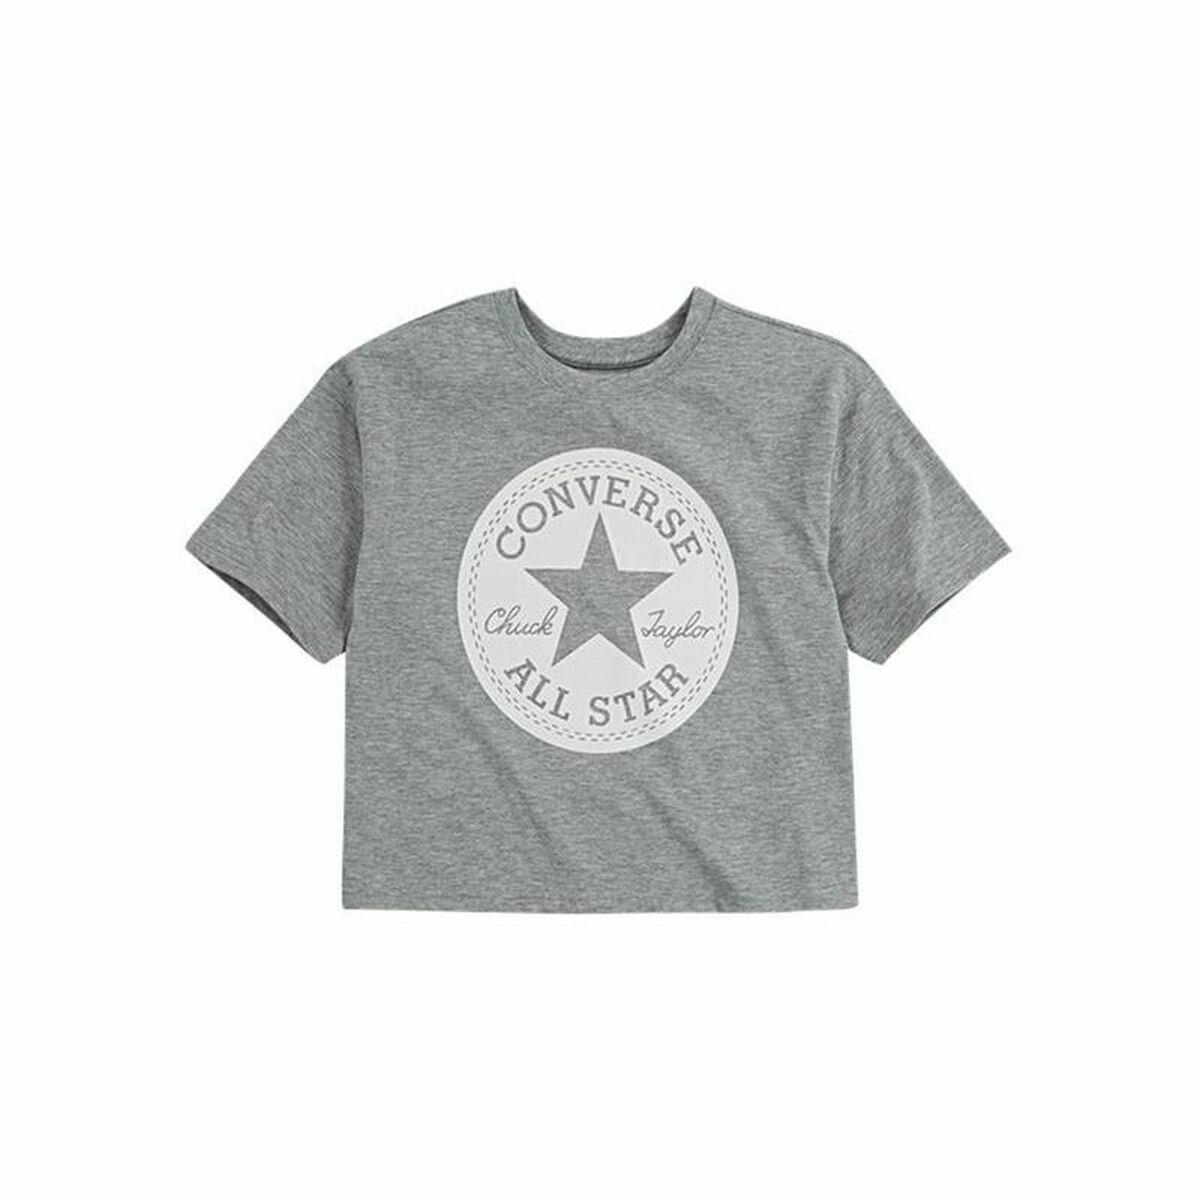 Kurzarm-T-Shirt für Grau Café Boxy - Kinder Tomorrow, Converse Chuck Patch Kitsch ehemals Café